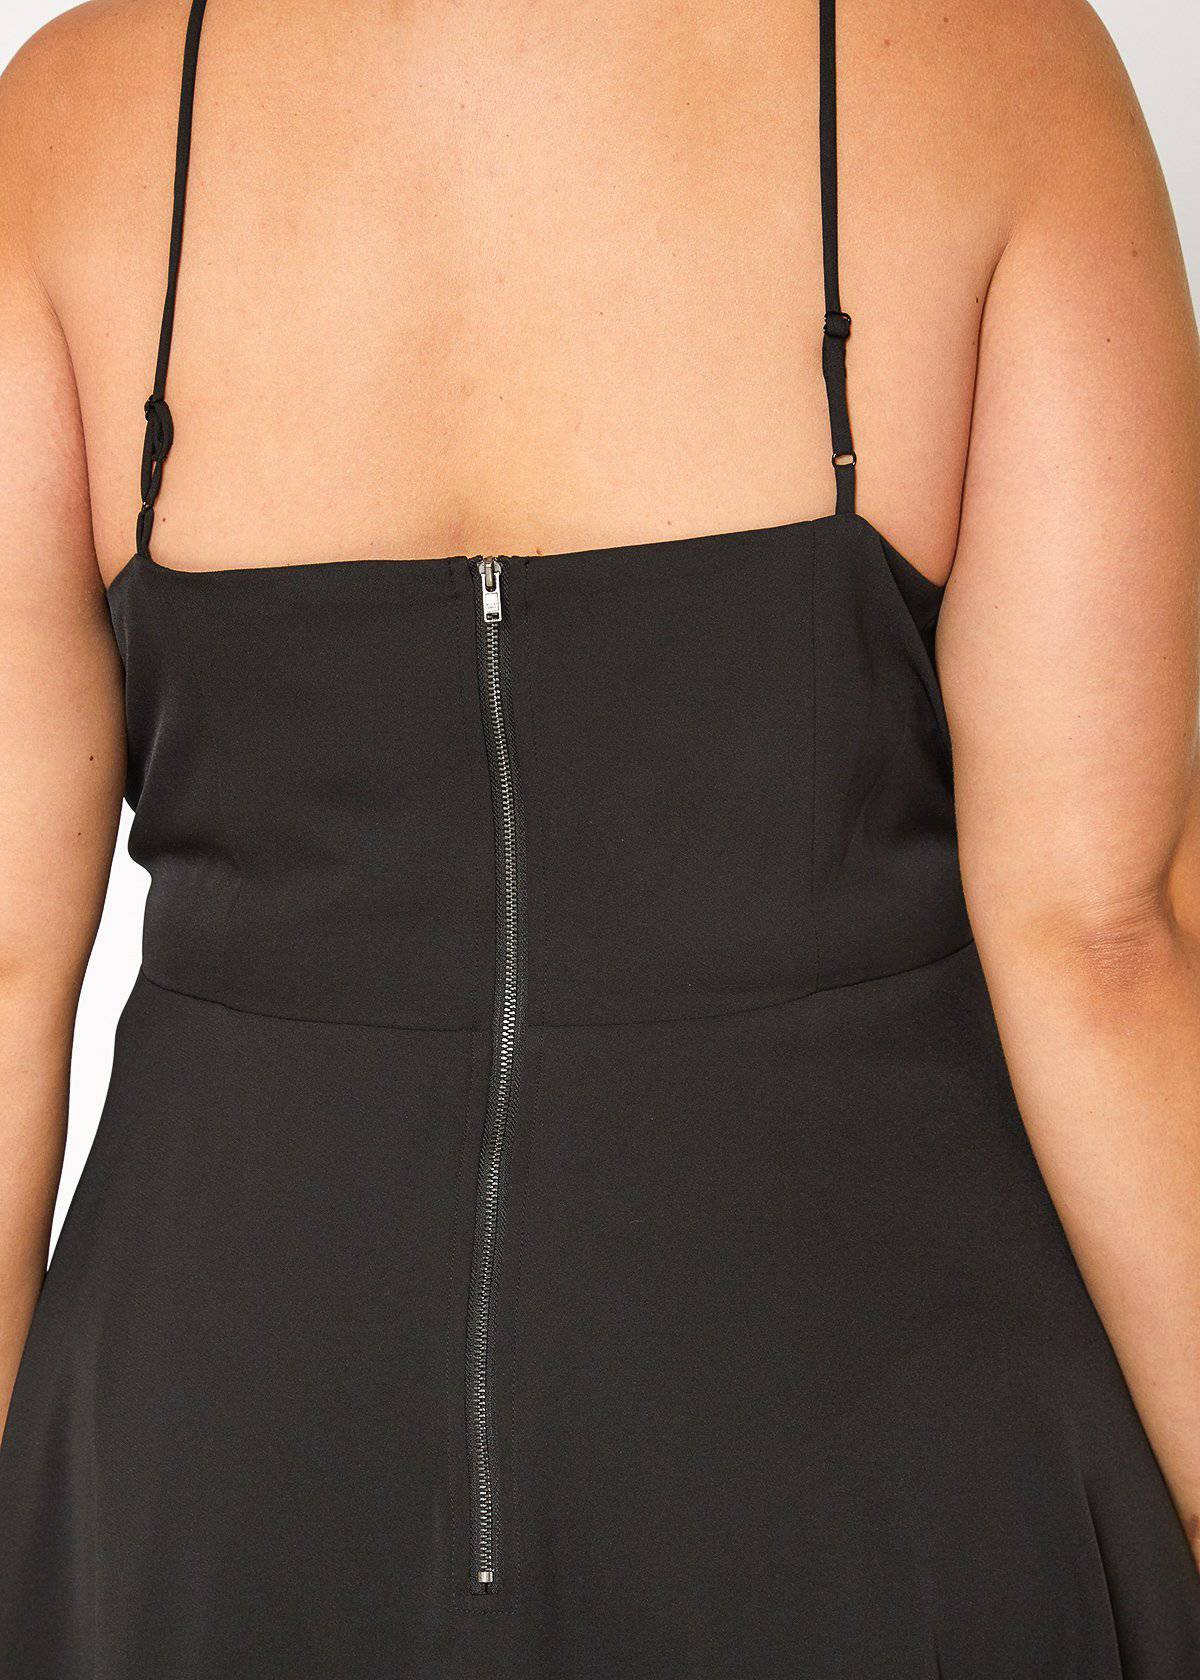 Plus Size V-neck Spaghetti Strap Cocktail Dress in Black by Shop at Konus